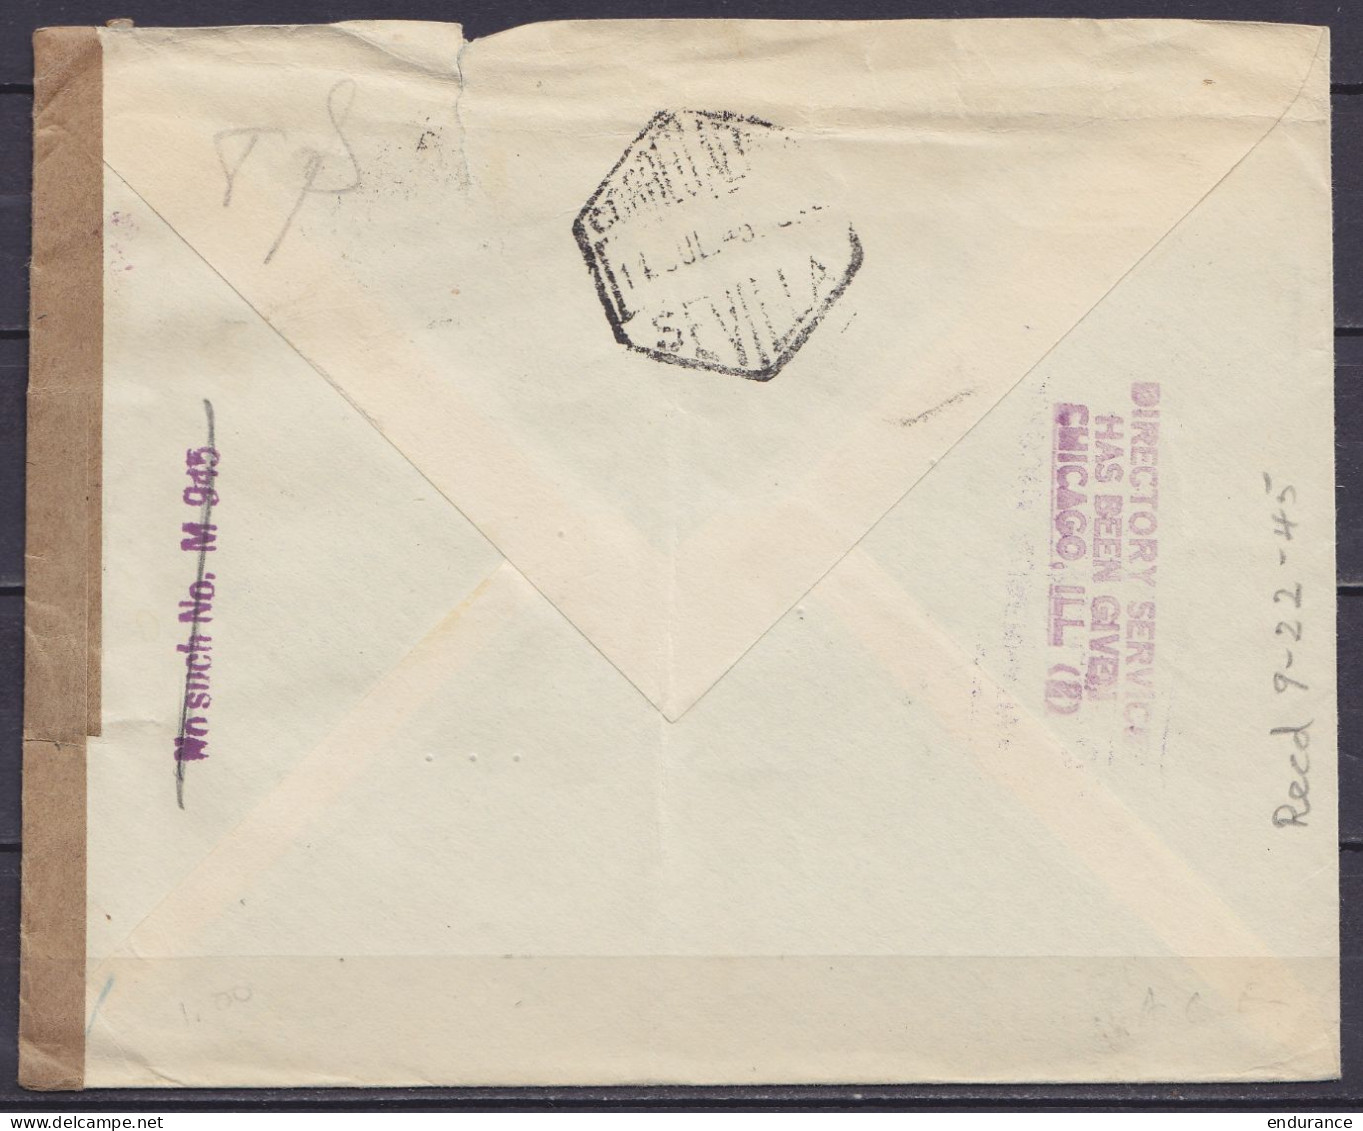 Espagne - L. Entête "Cosimo Causo" Par Avion Affr. 4,65ptas Càd Hexagon. "CORREO AEREO /11.JUL.1945/ SEVILLA" Pour CHICA - Lettres & Documents